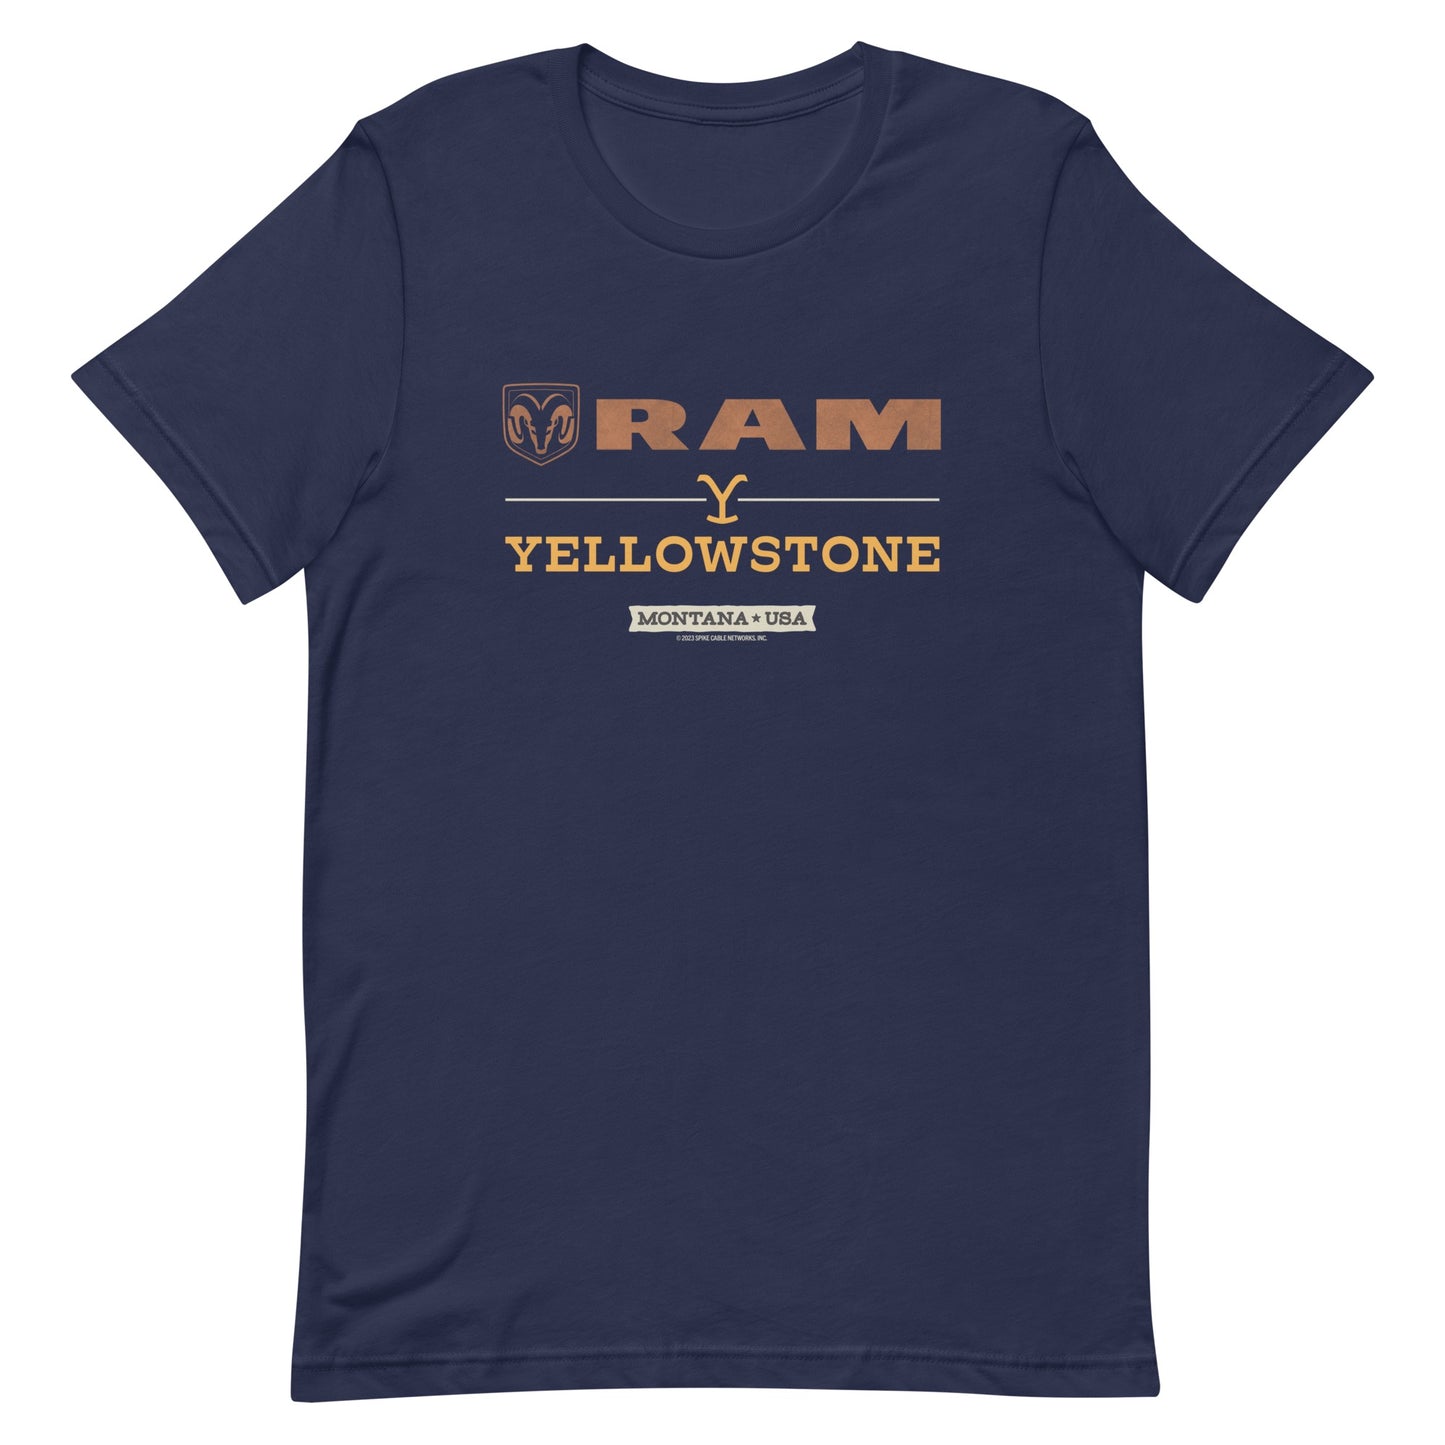 Yellowstone x Ram T-Shirt